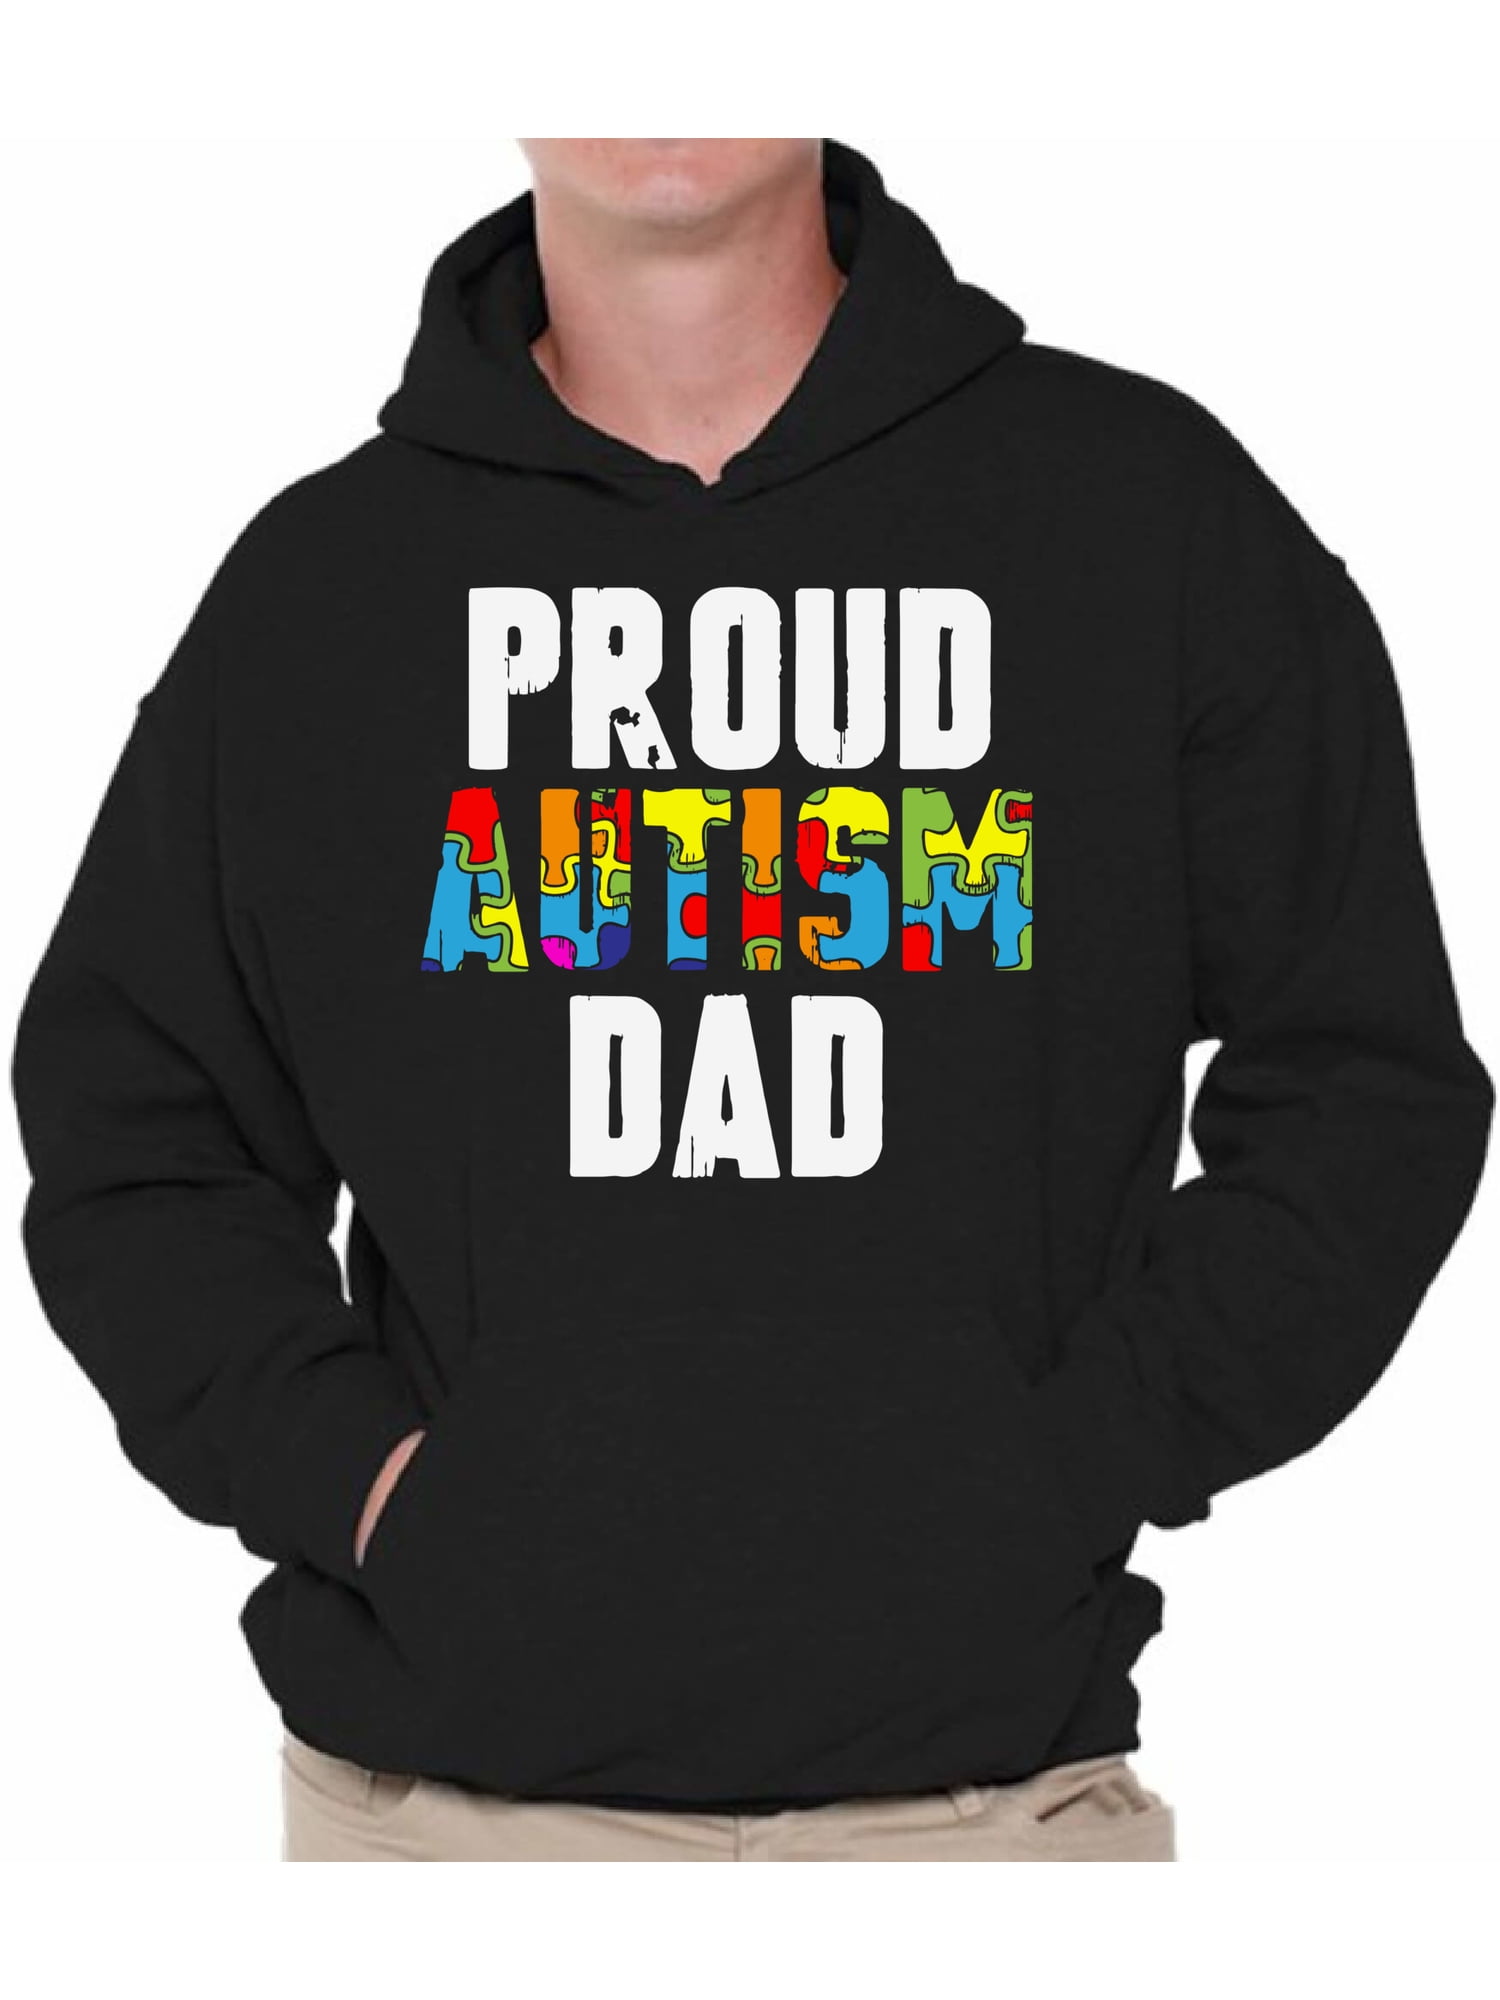 Autism Dad T-shirt Autism Awareness Autistic Super Dad Birthday Gift Adult Top